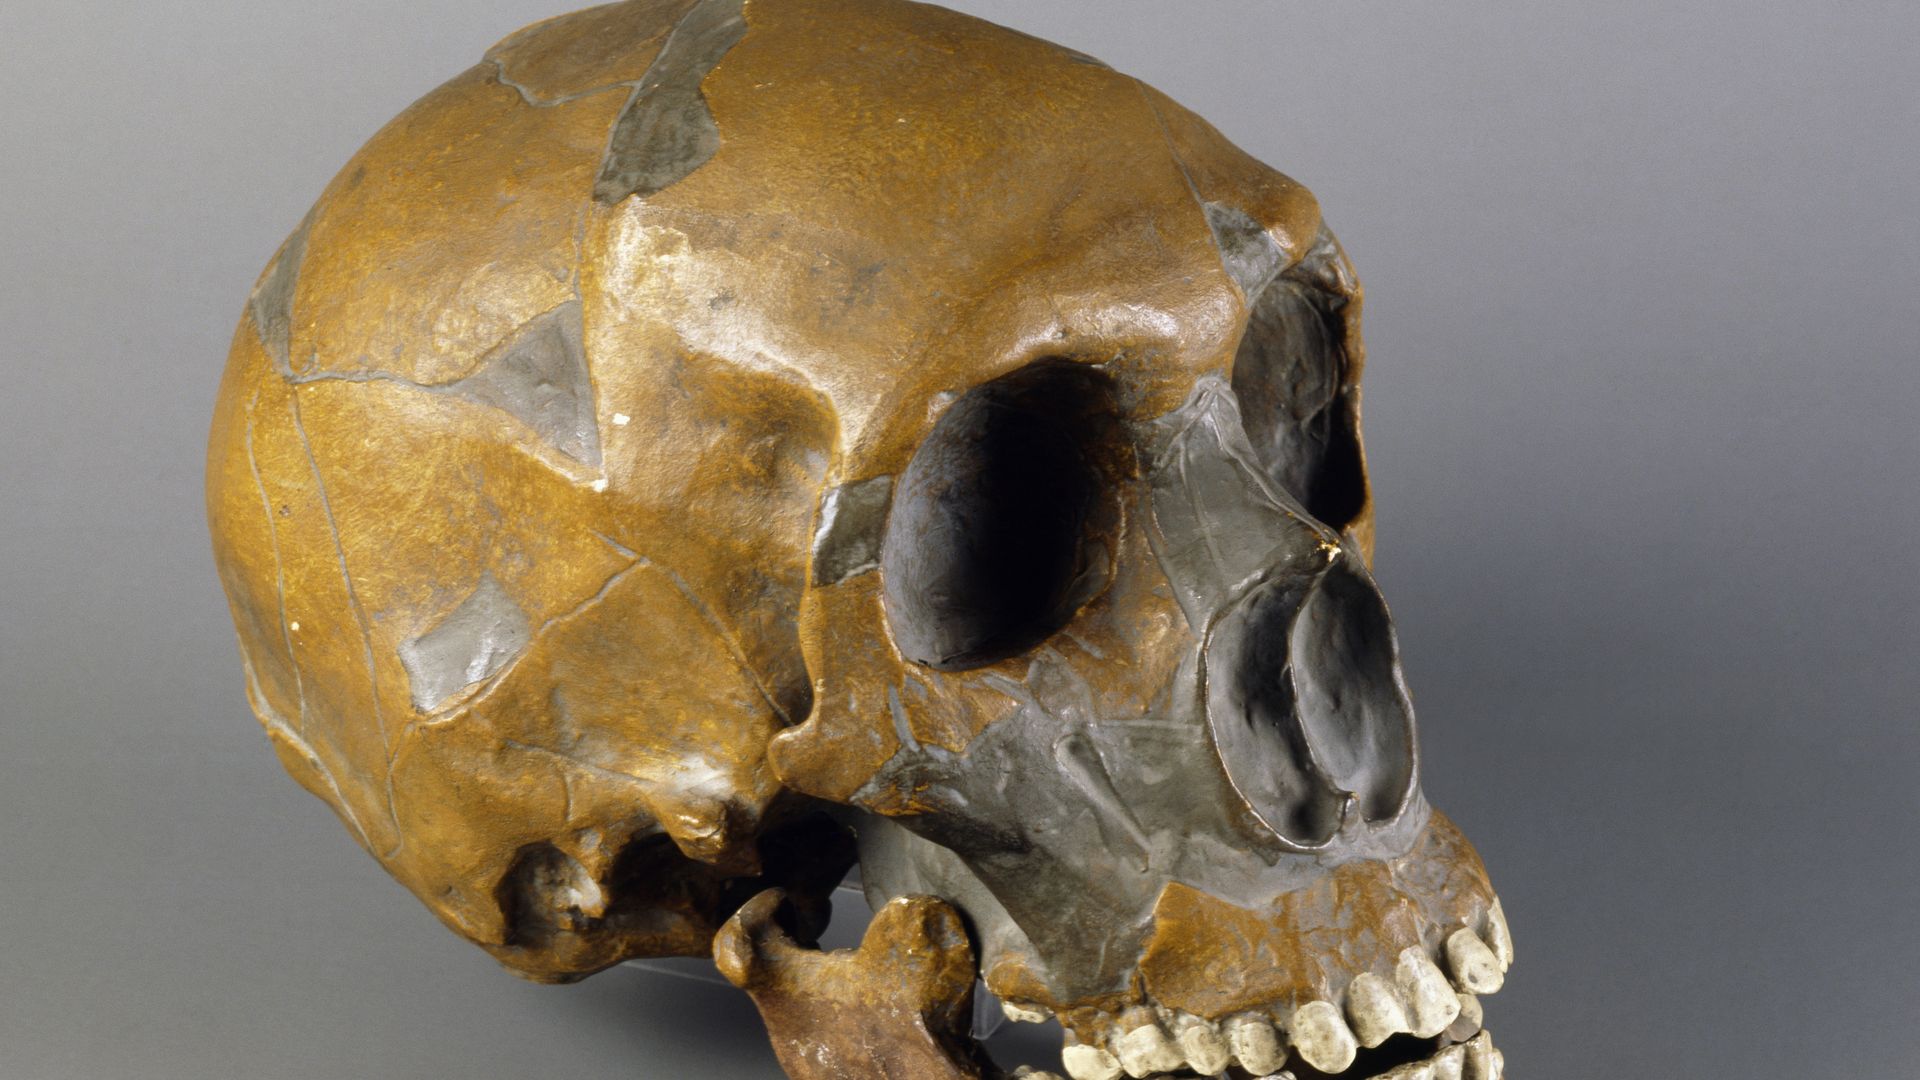 Image of the skull of a Homo sapien.